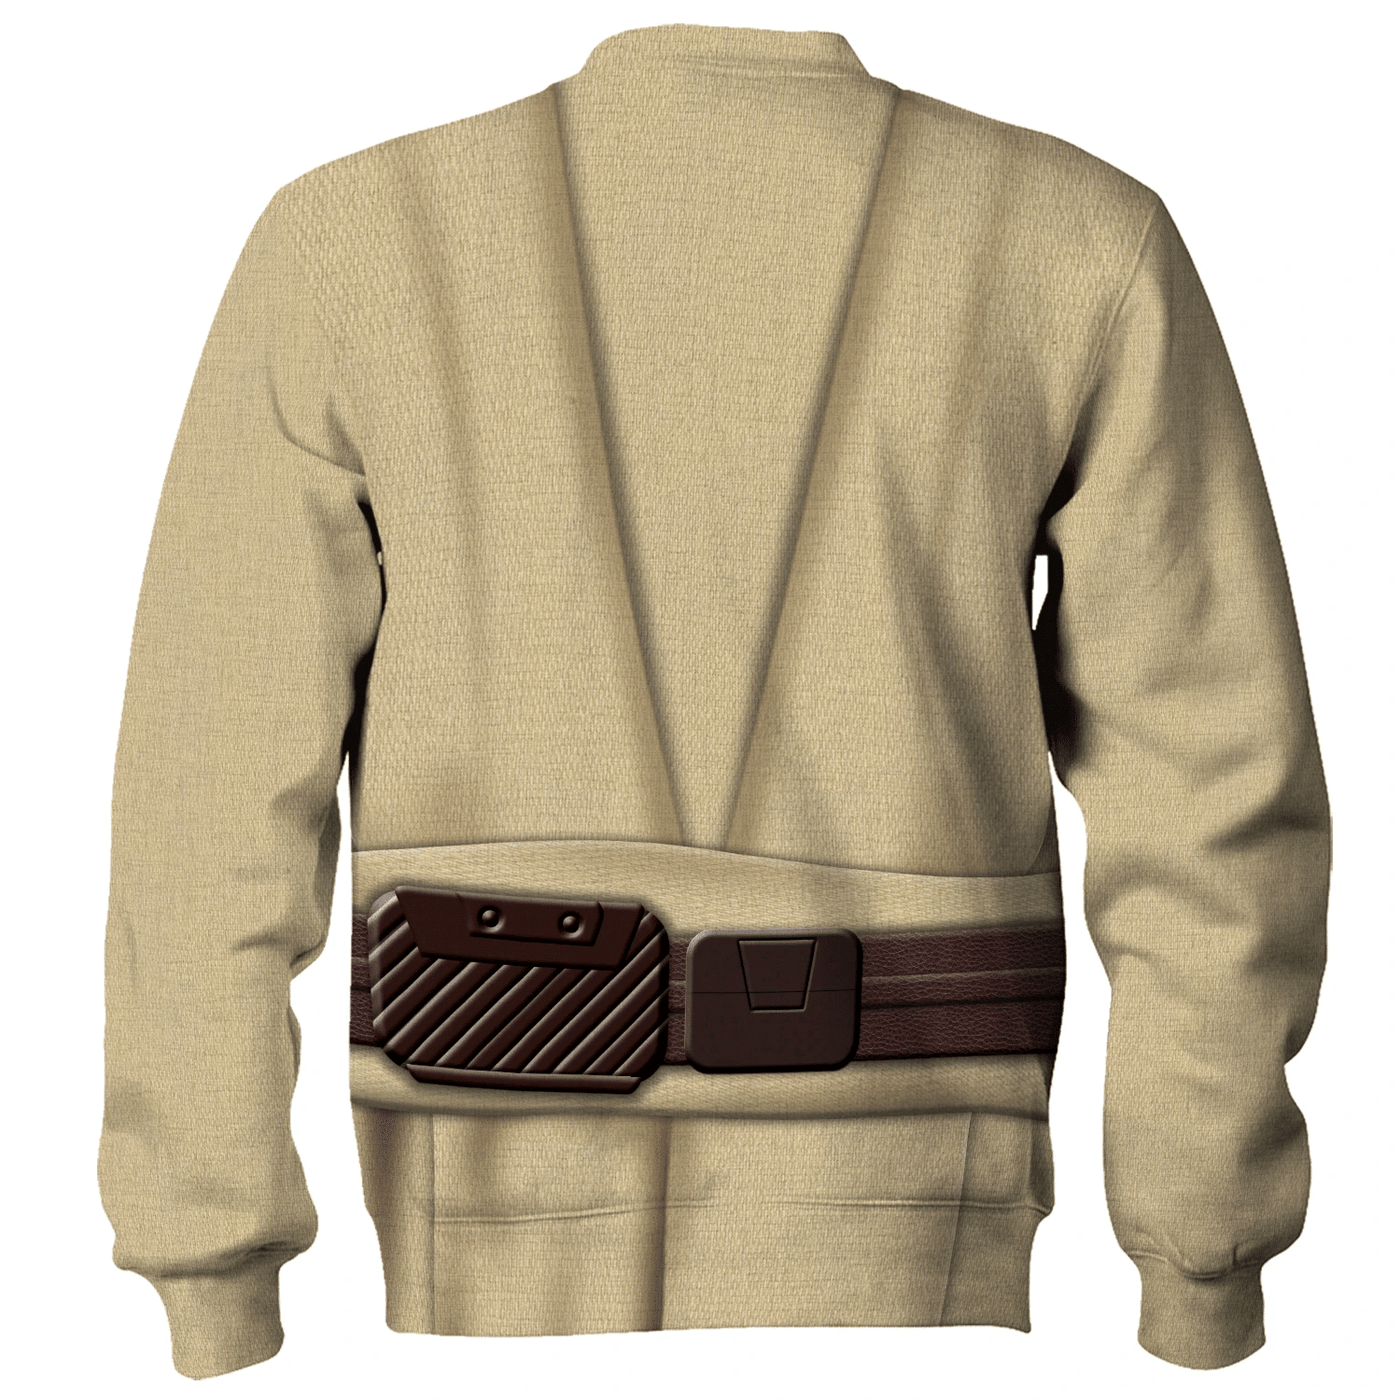 Star Wars Obi Wan Kenobi Costume - Sweater - Ugly Christmas Sweater